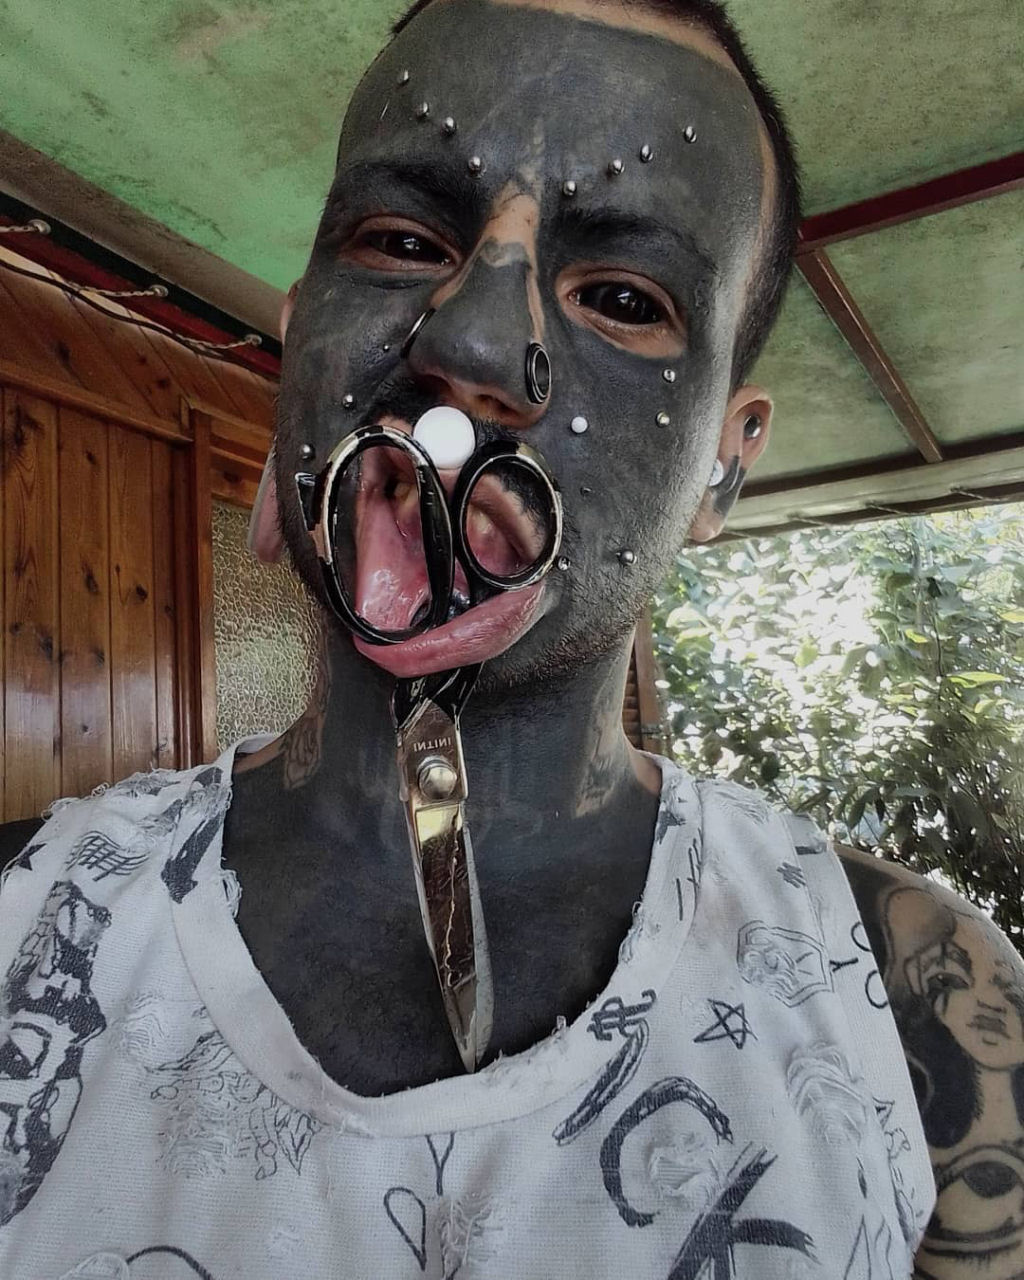 O italiano 'mutante' já tatuou 70% de seu corpo de preto tem a língua viperina